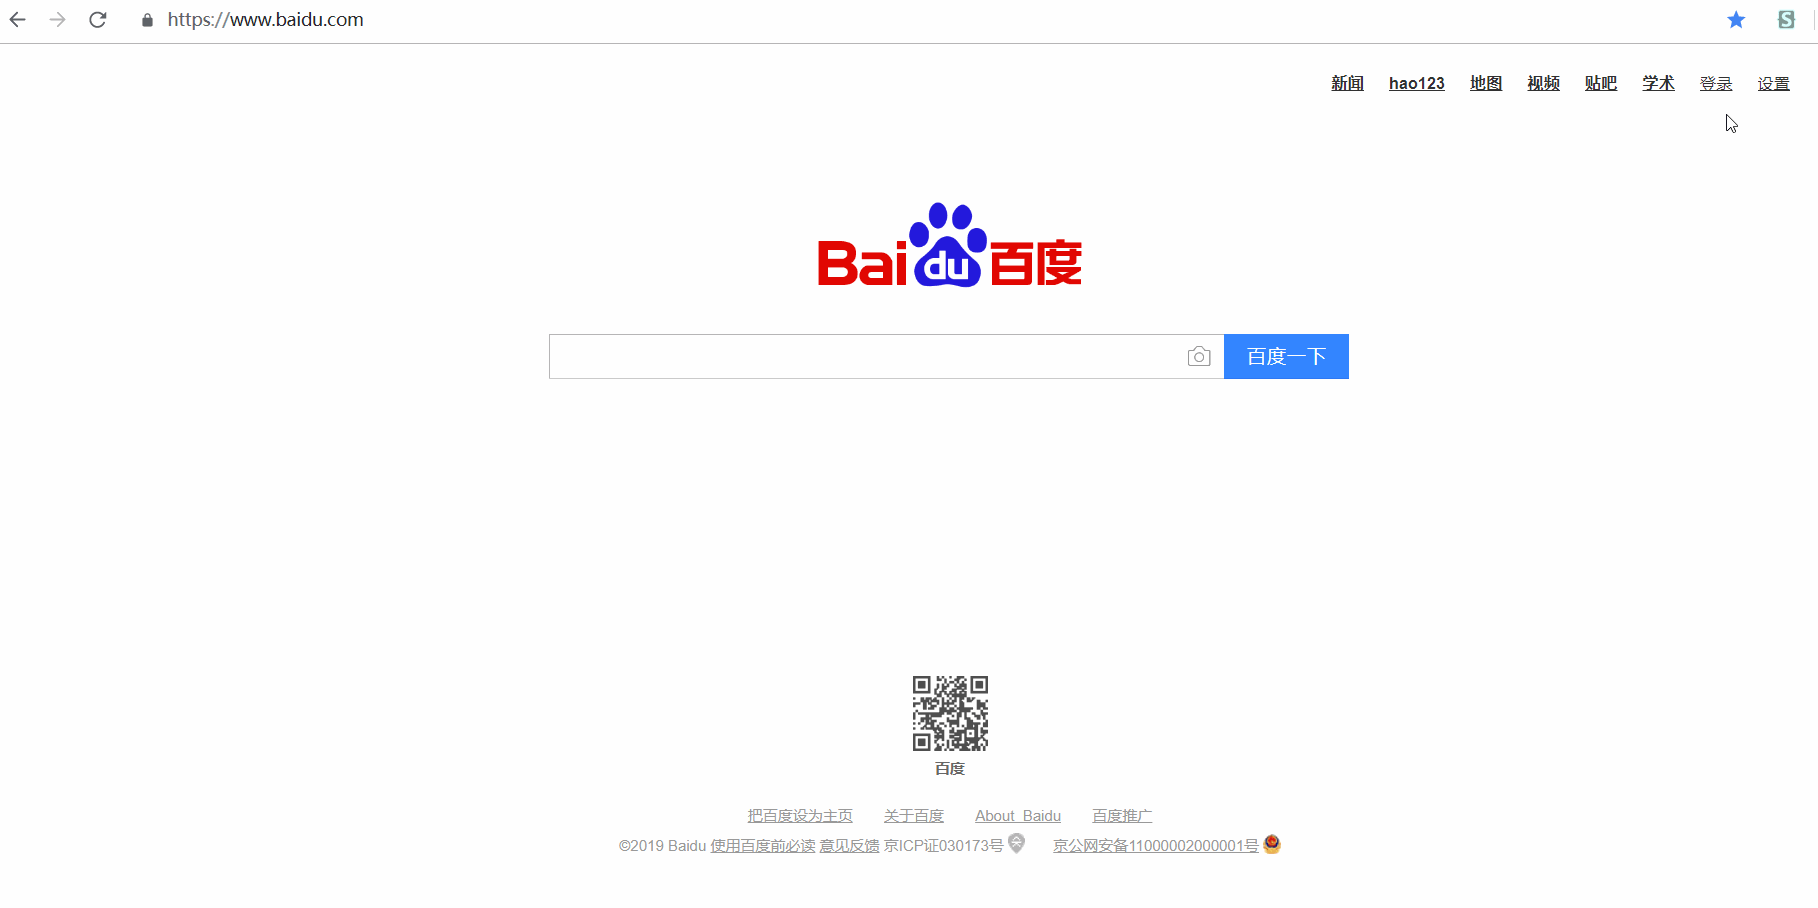 Baidu Lite 百度轻